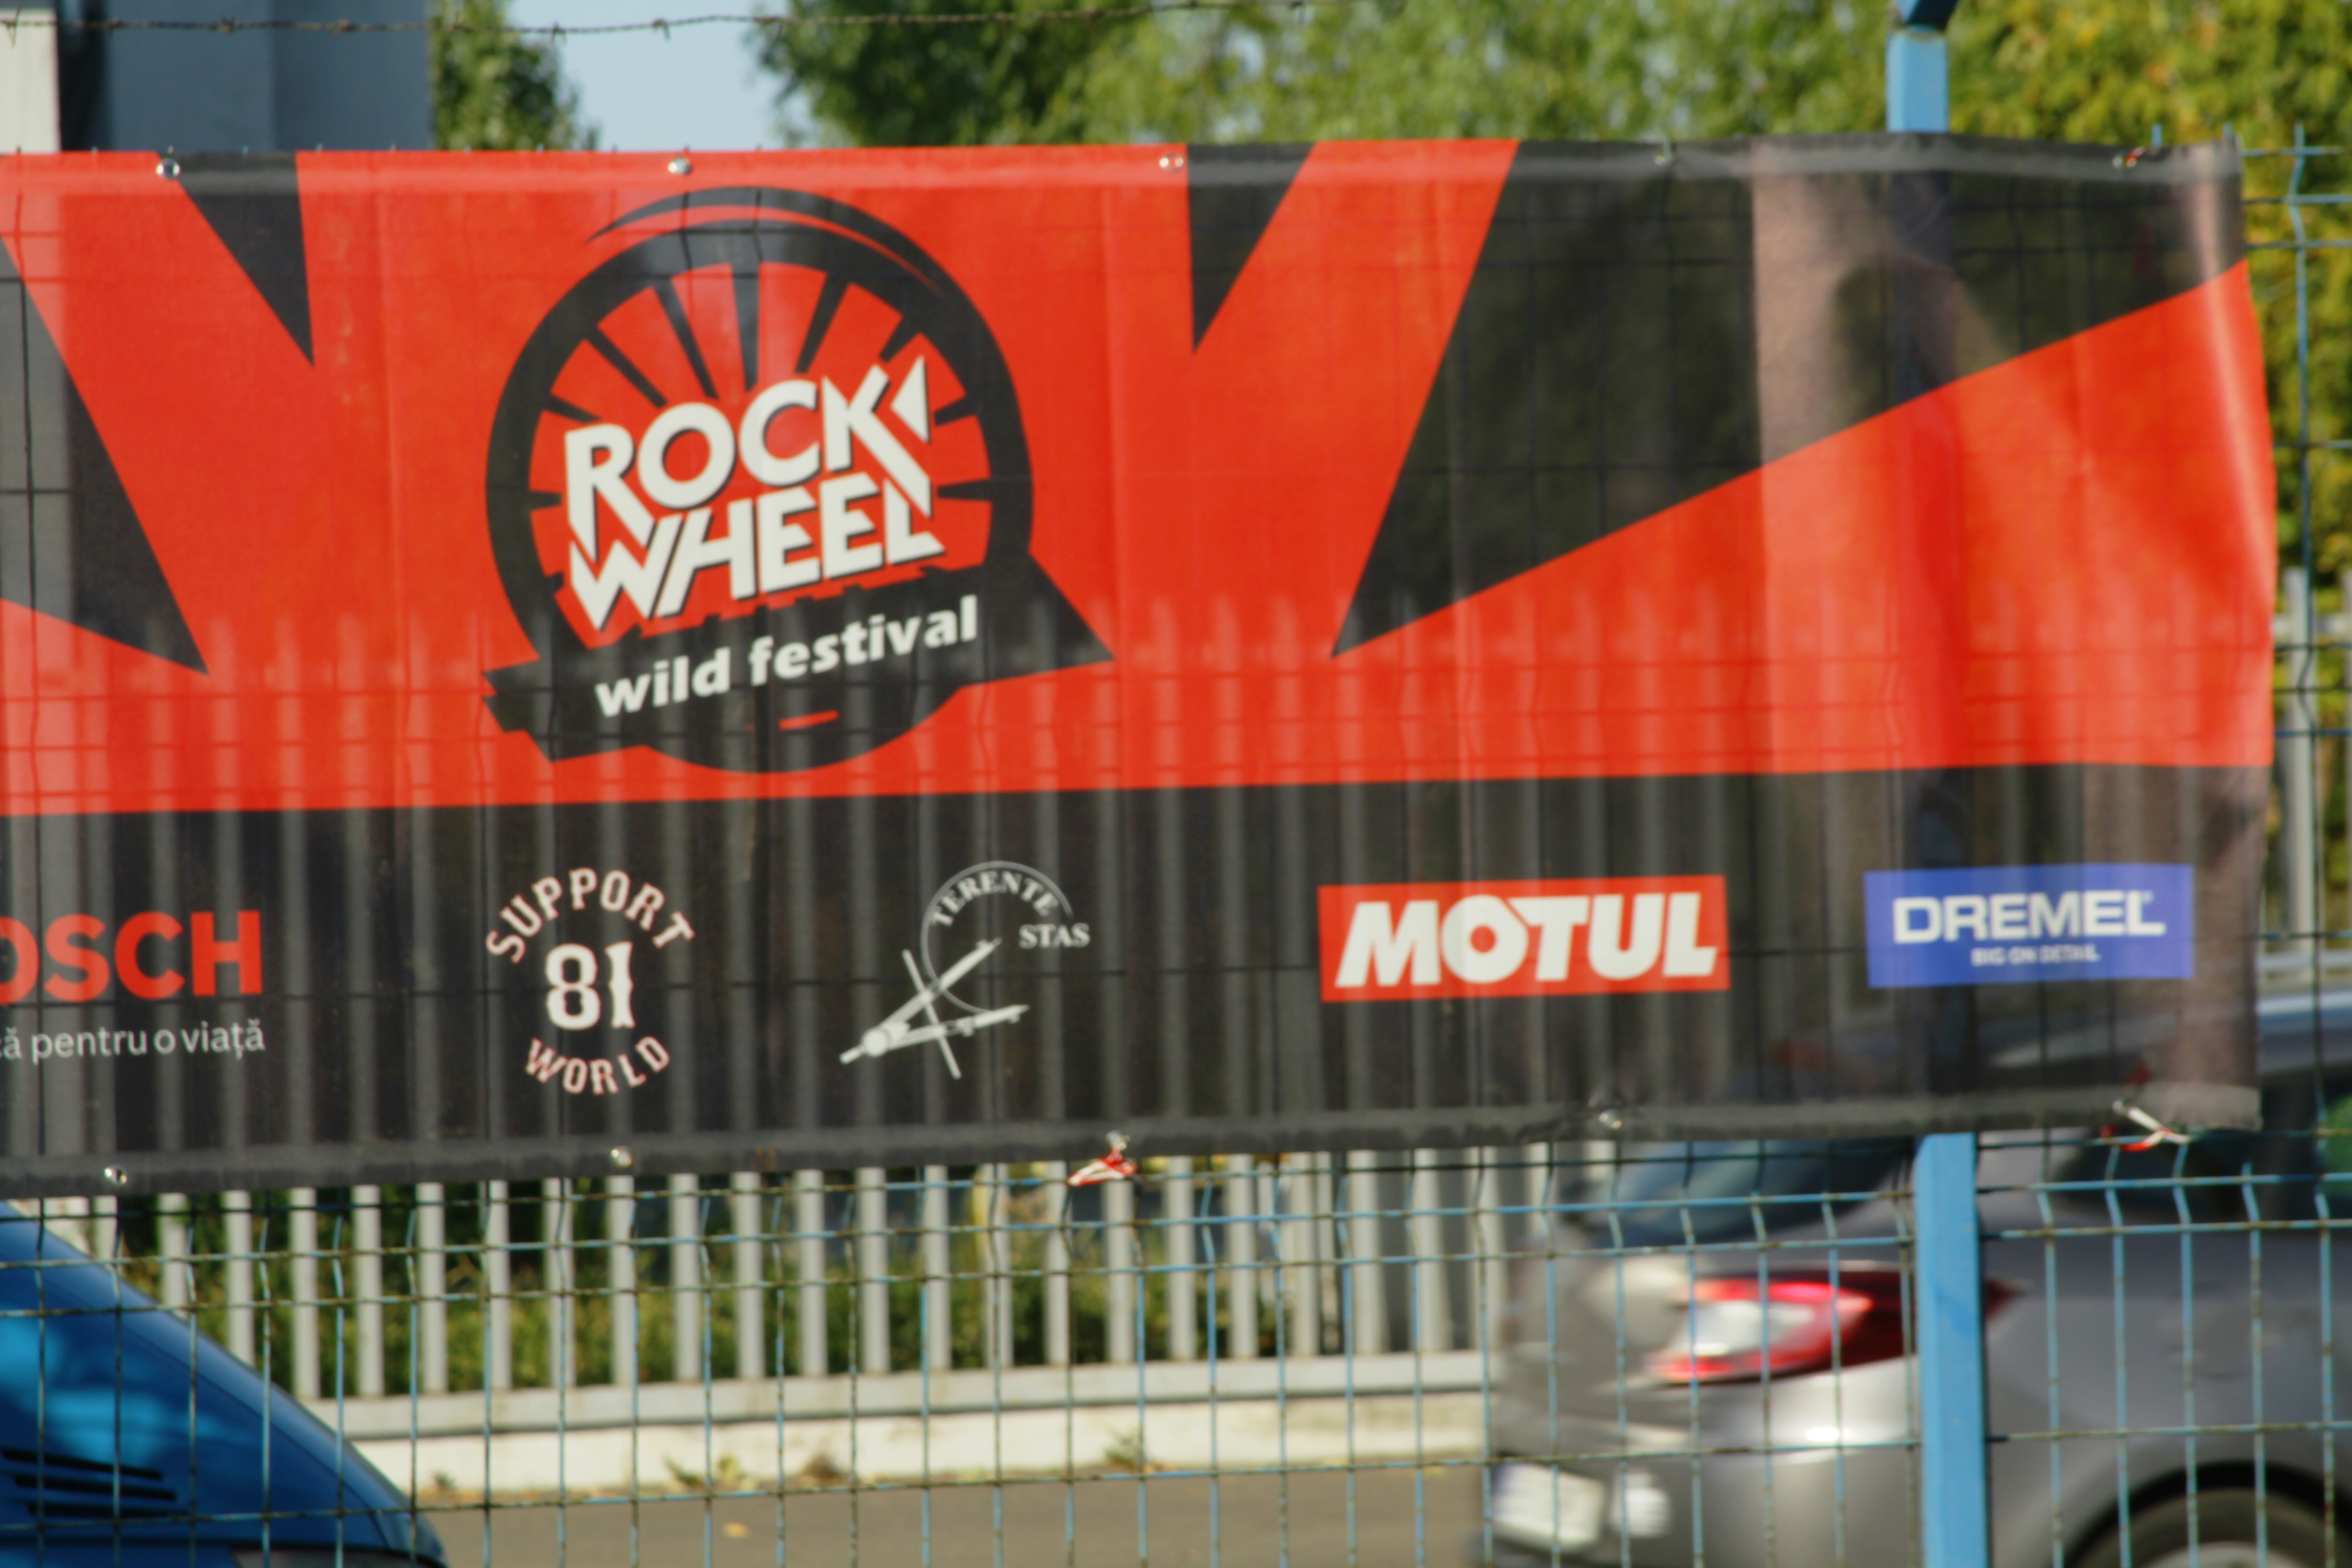 Moto Incepatori Rock Wheel Festival